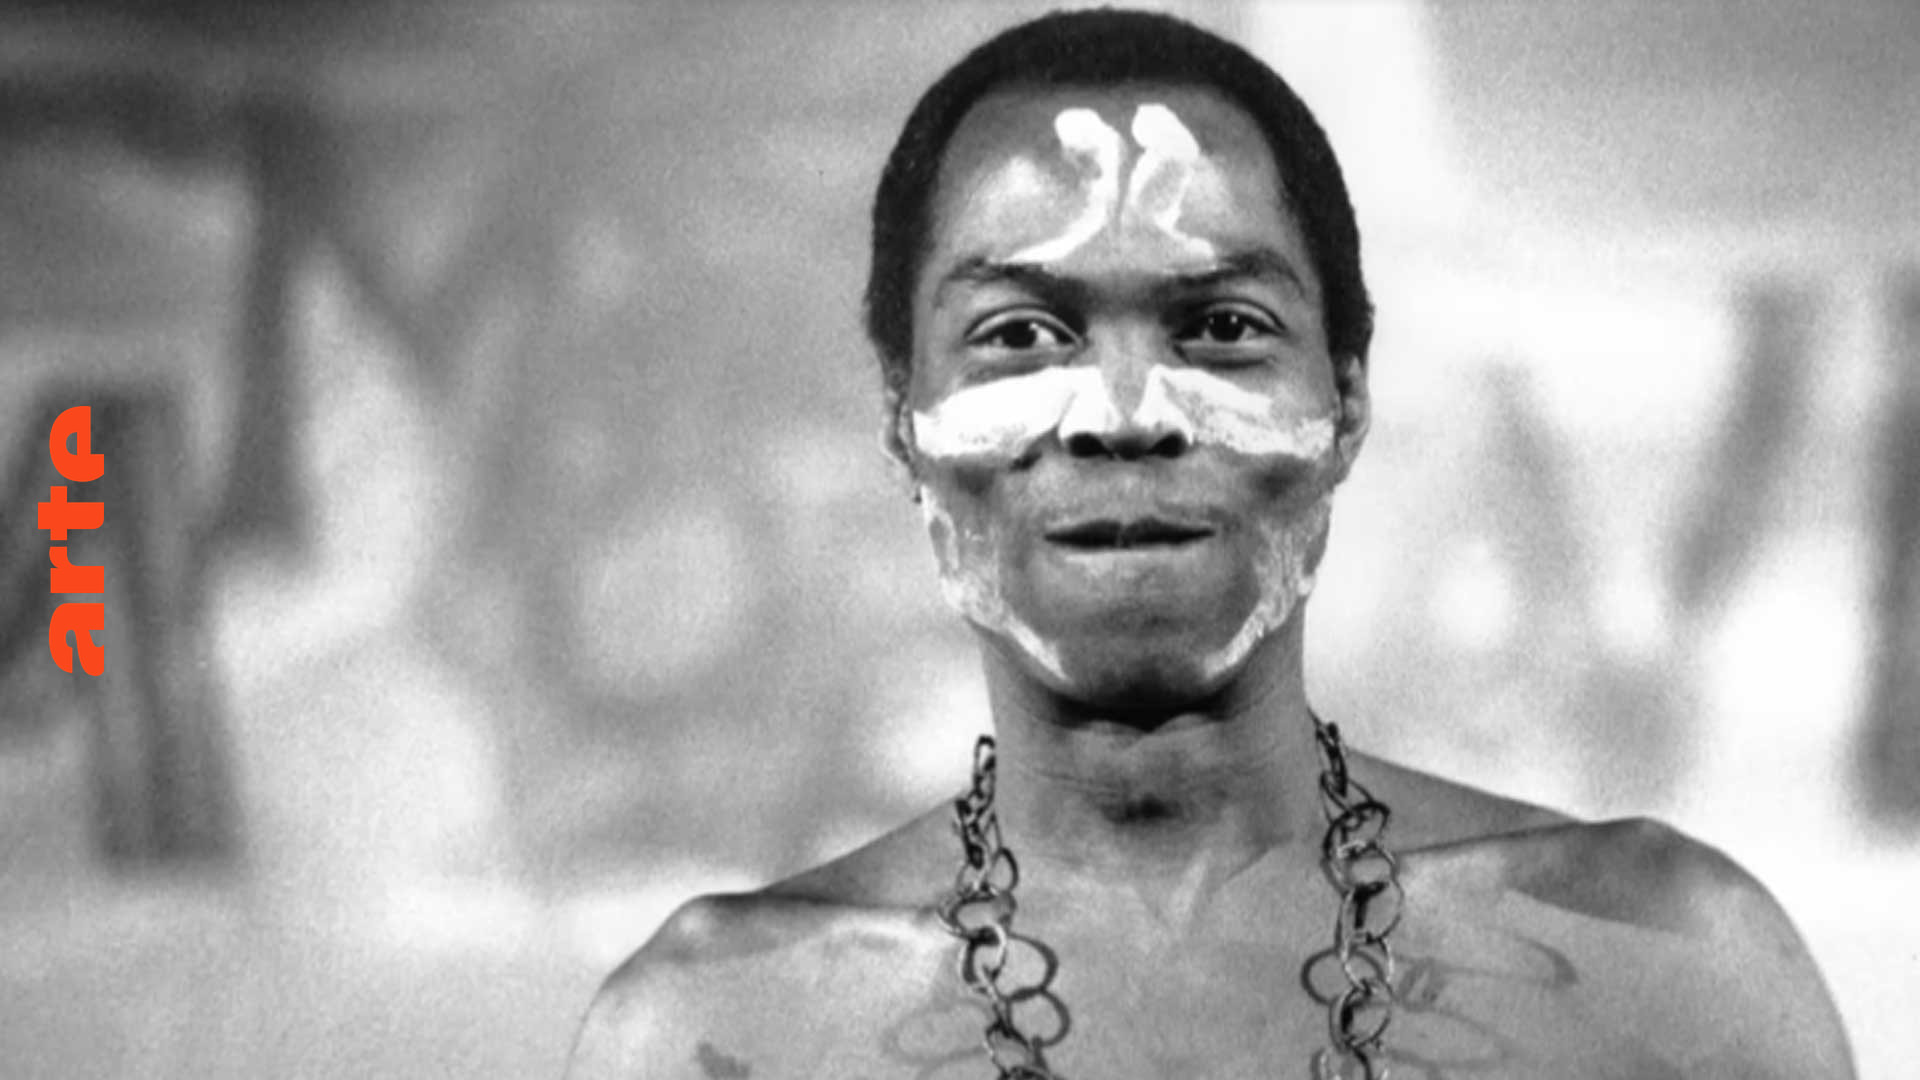 In Nigeria: Fela Kuti erfindet den Afrobeat